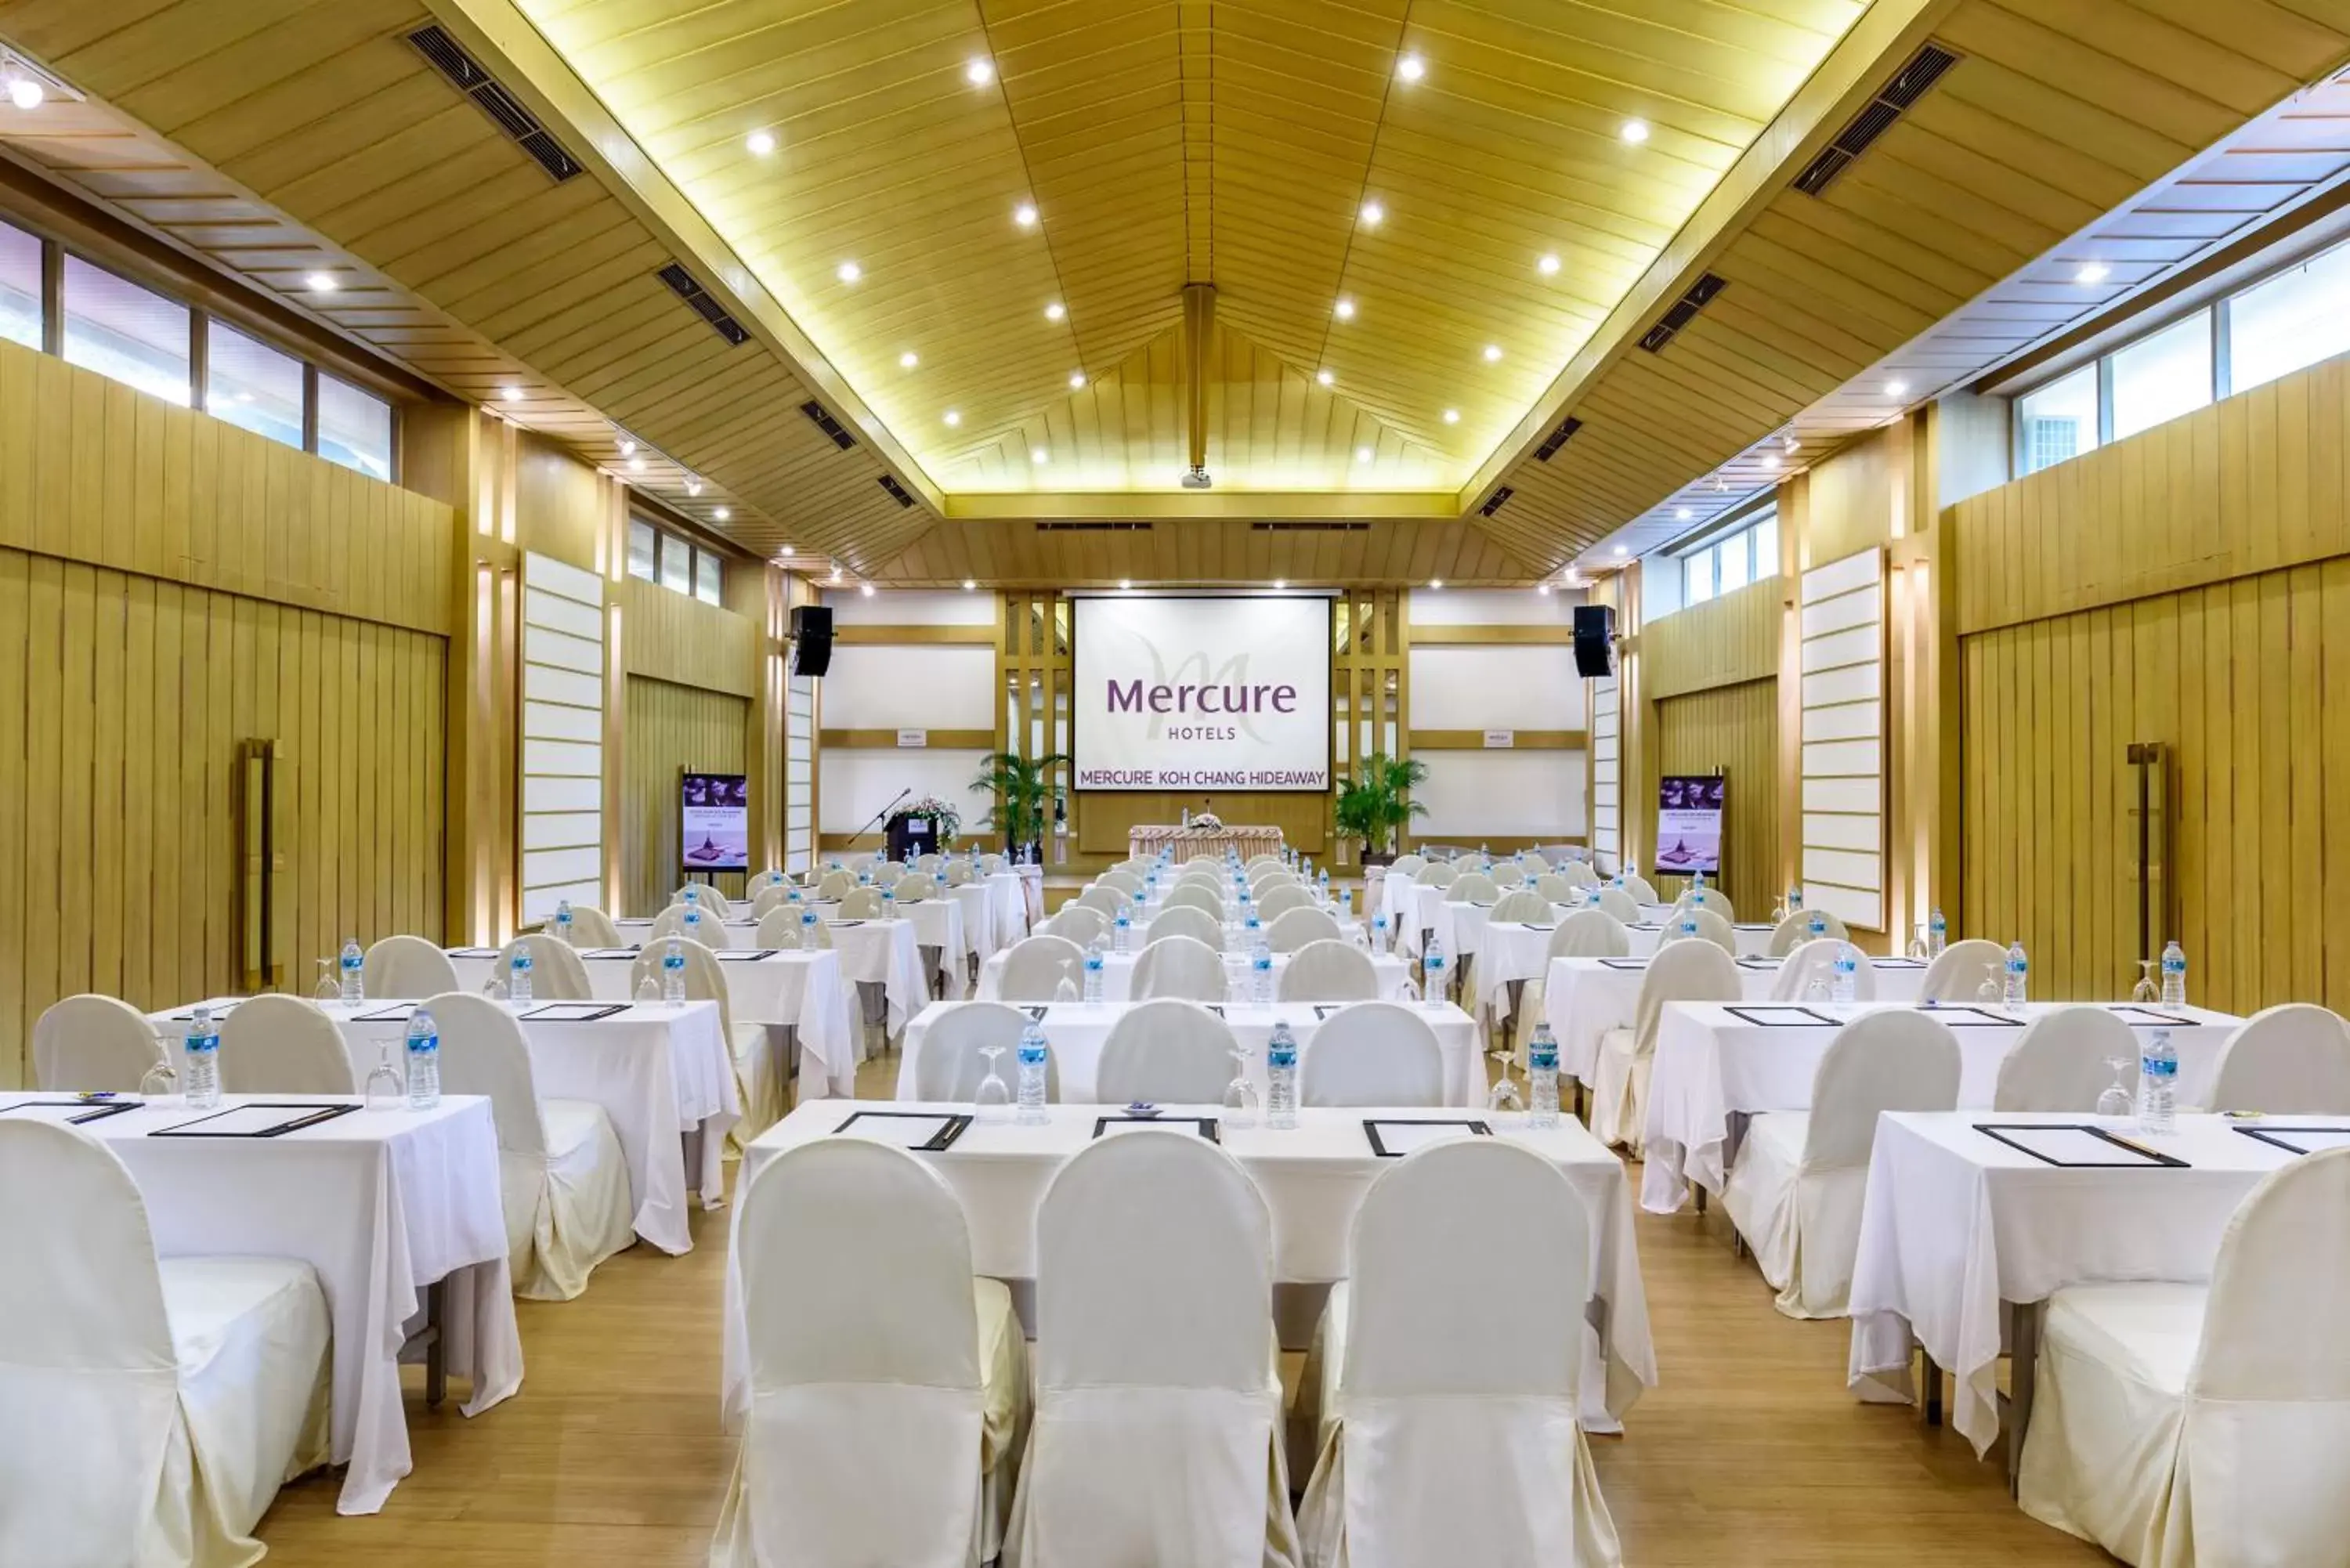 Business facilities, Banquet Facilities in Mercure Koh Chang Hideaway